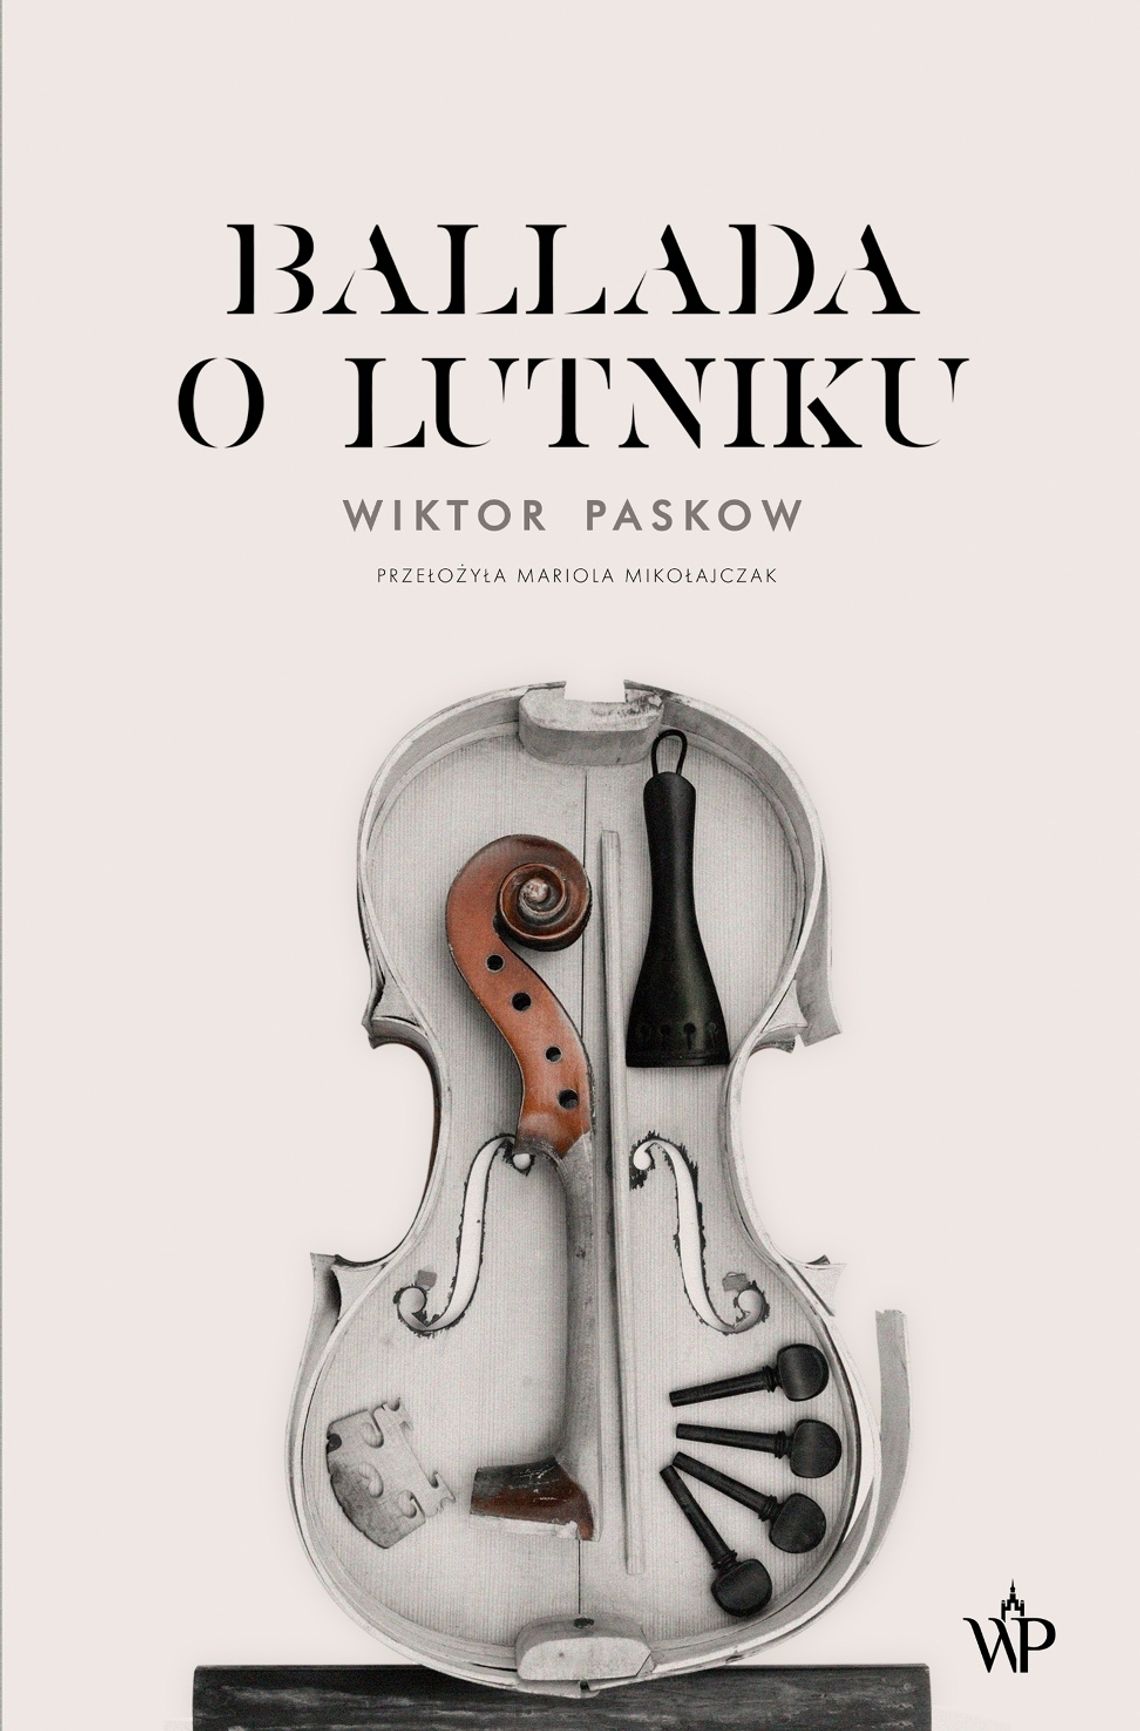 Polecamy: Wiktor Paskow "Ballada o lutniku" 